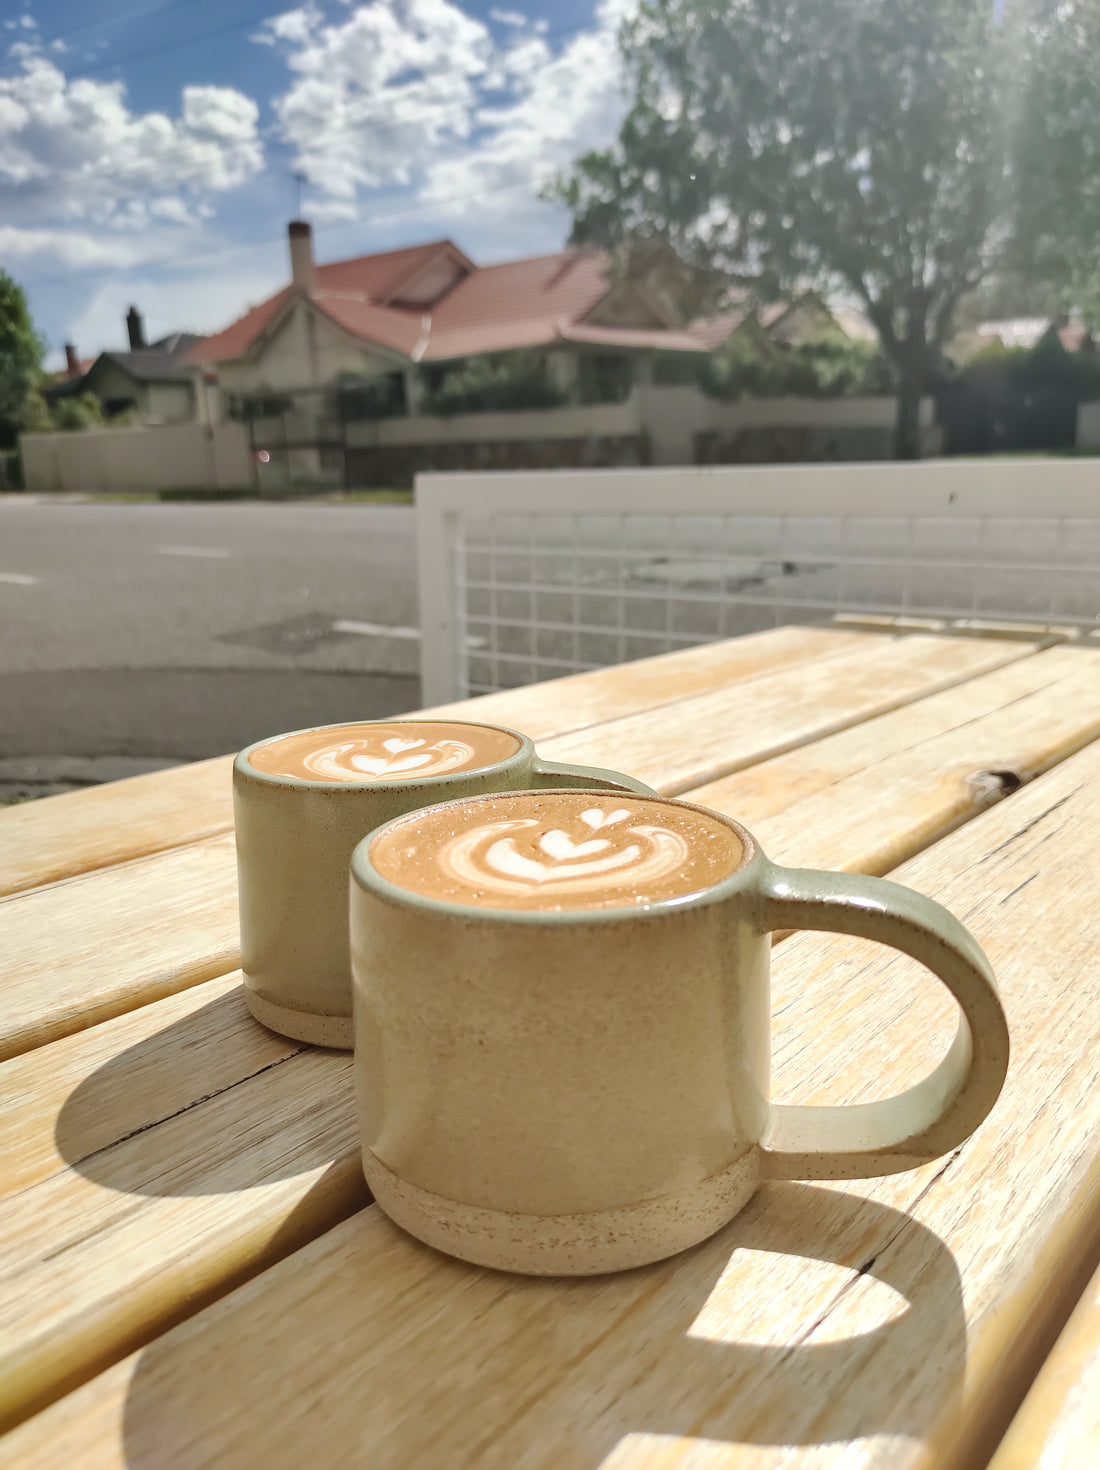 Handmade ceramic coffee mugs outside cafe